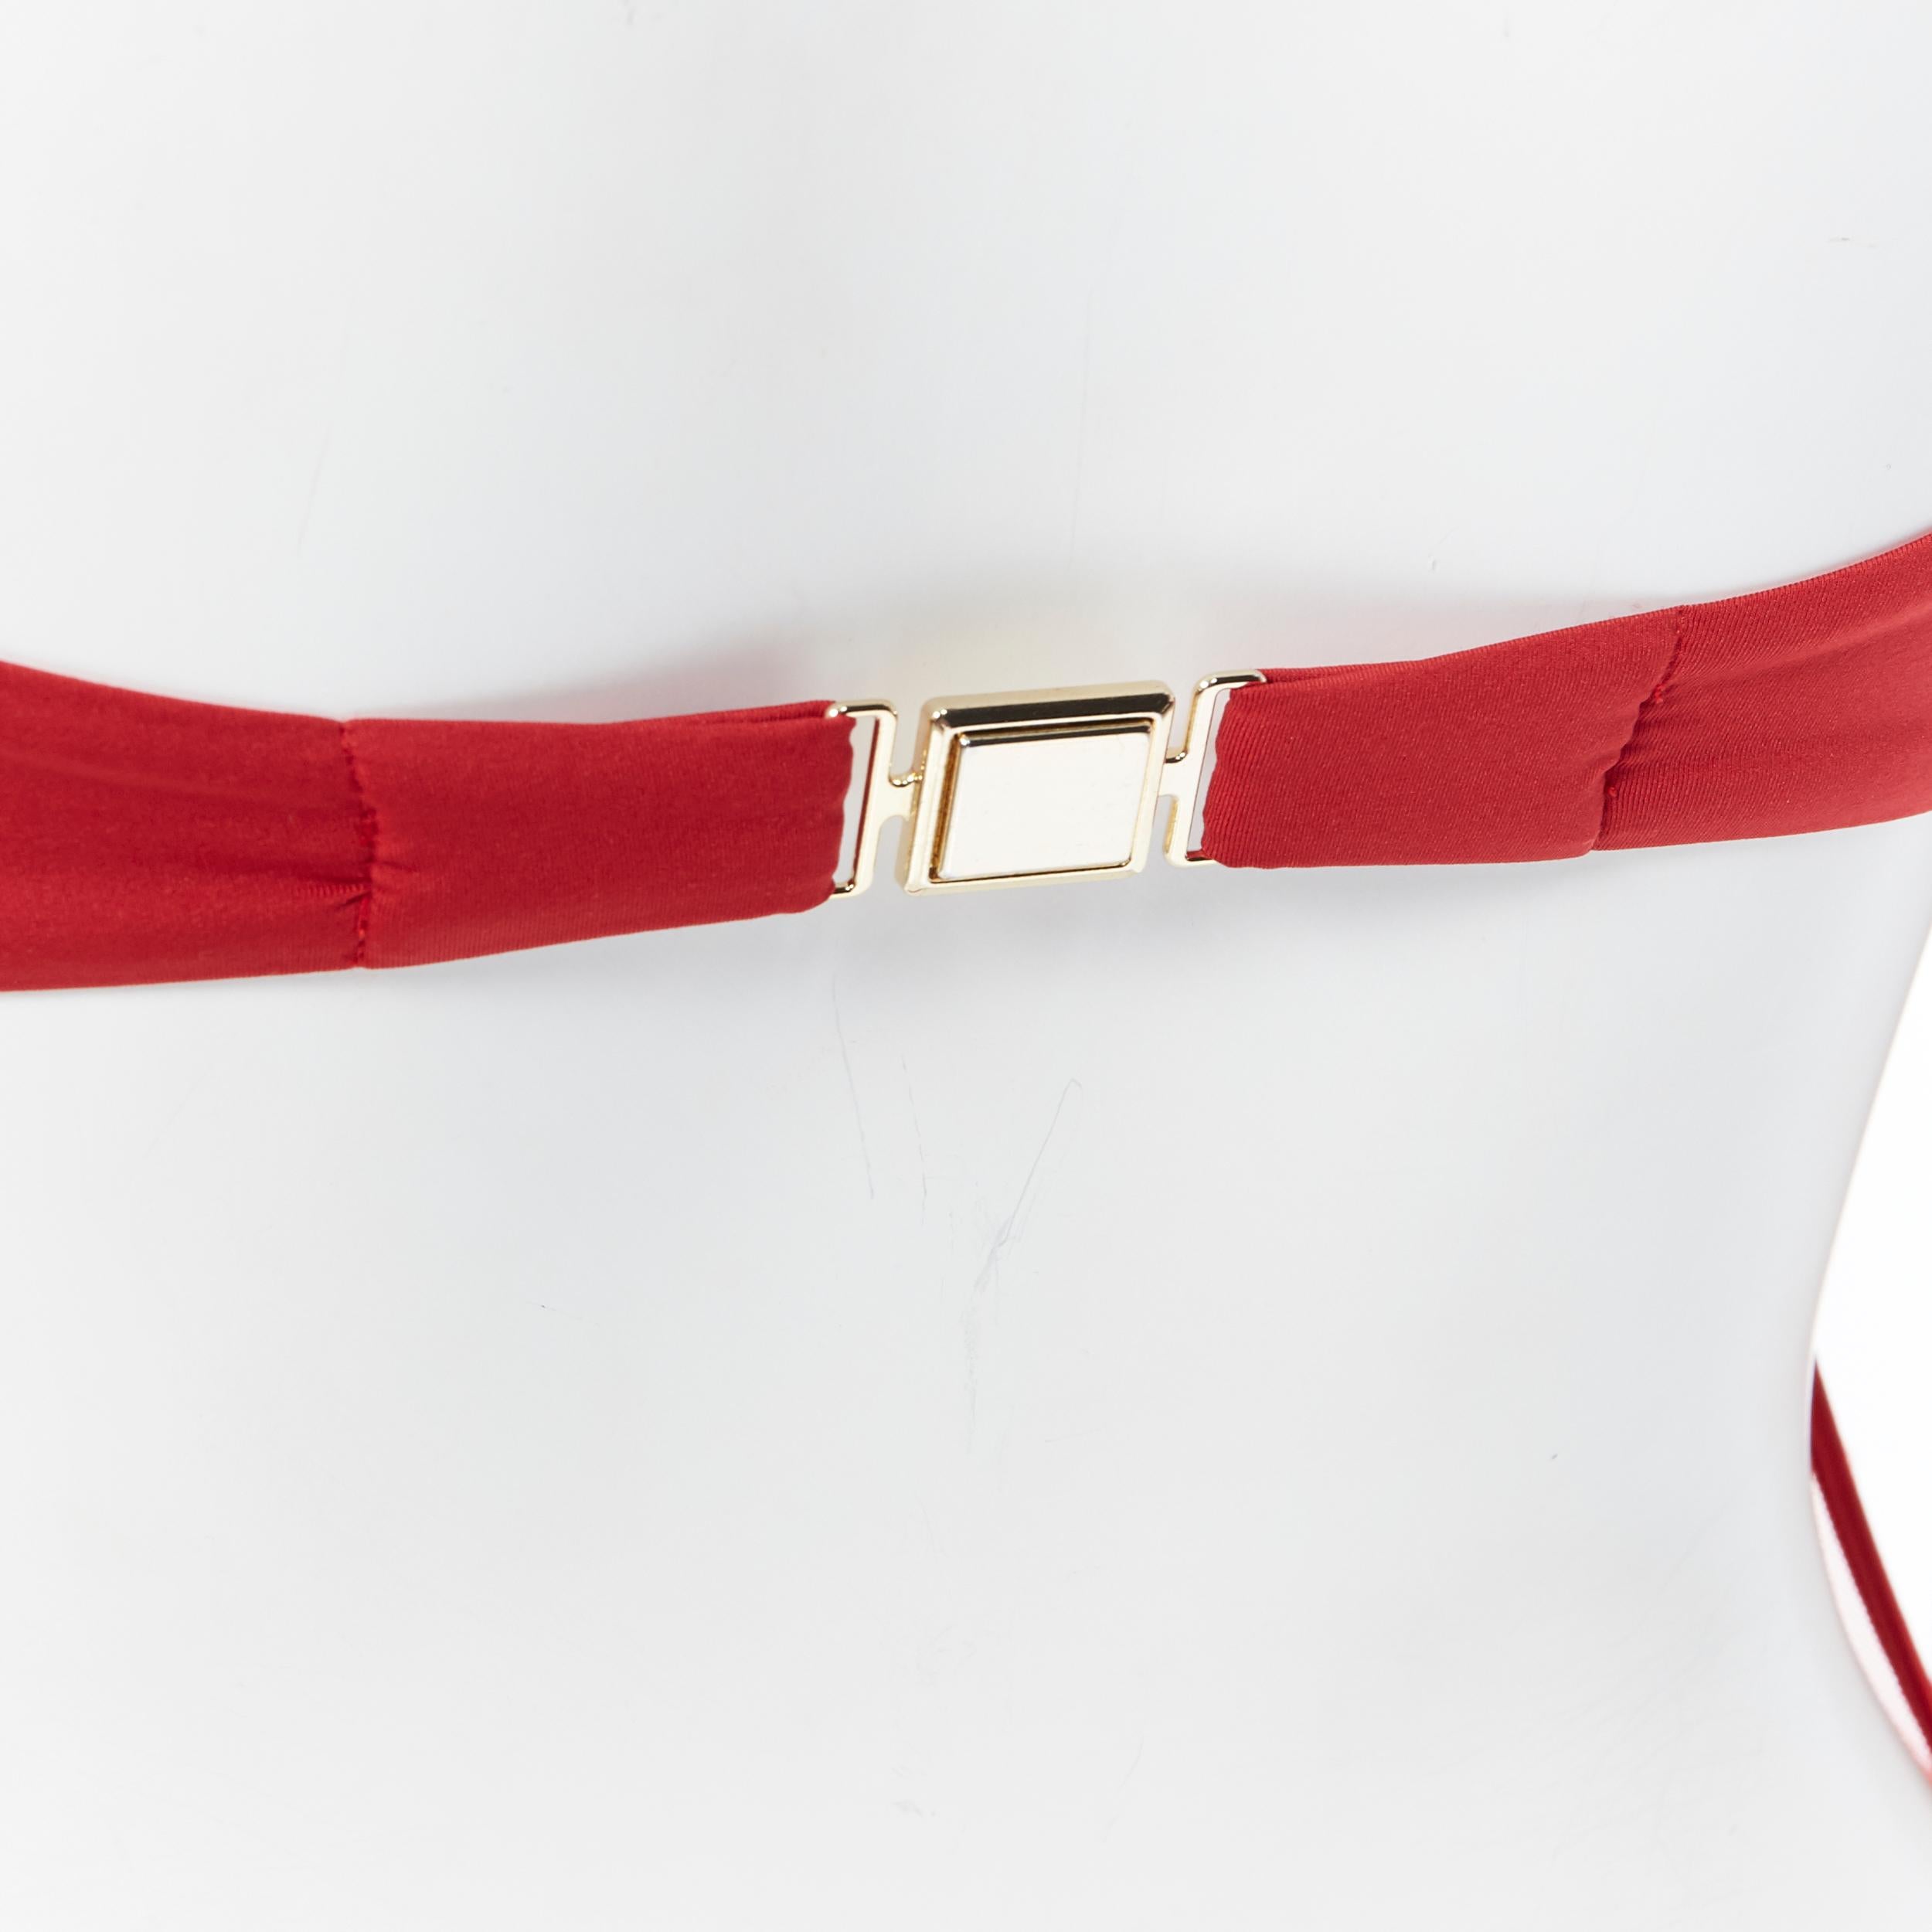 new LA PERLA Graphique Couture red boned sheer body monokini swimsuit IT42B S 2